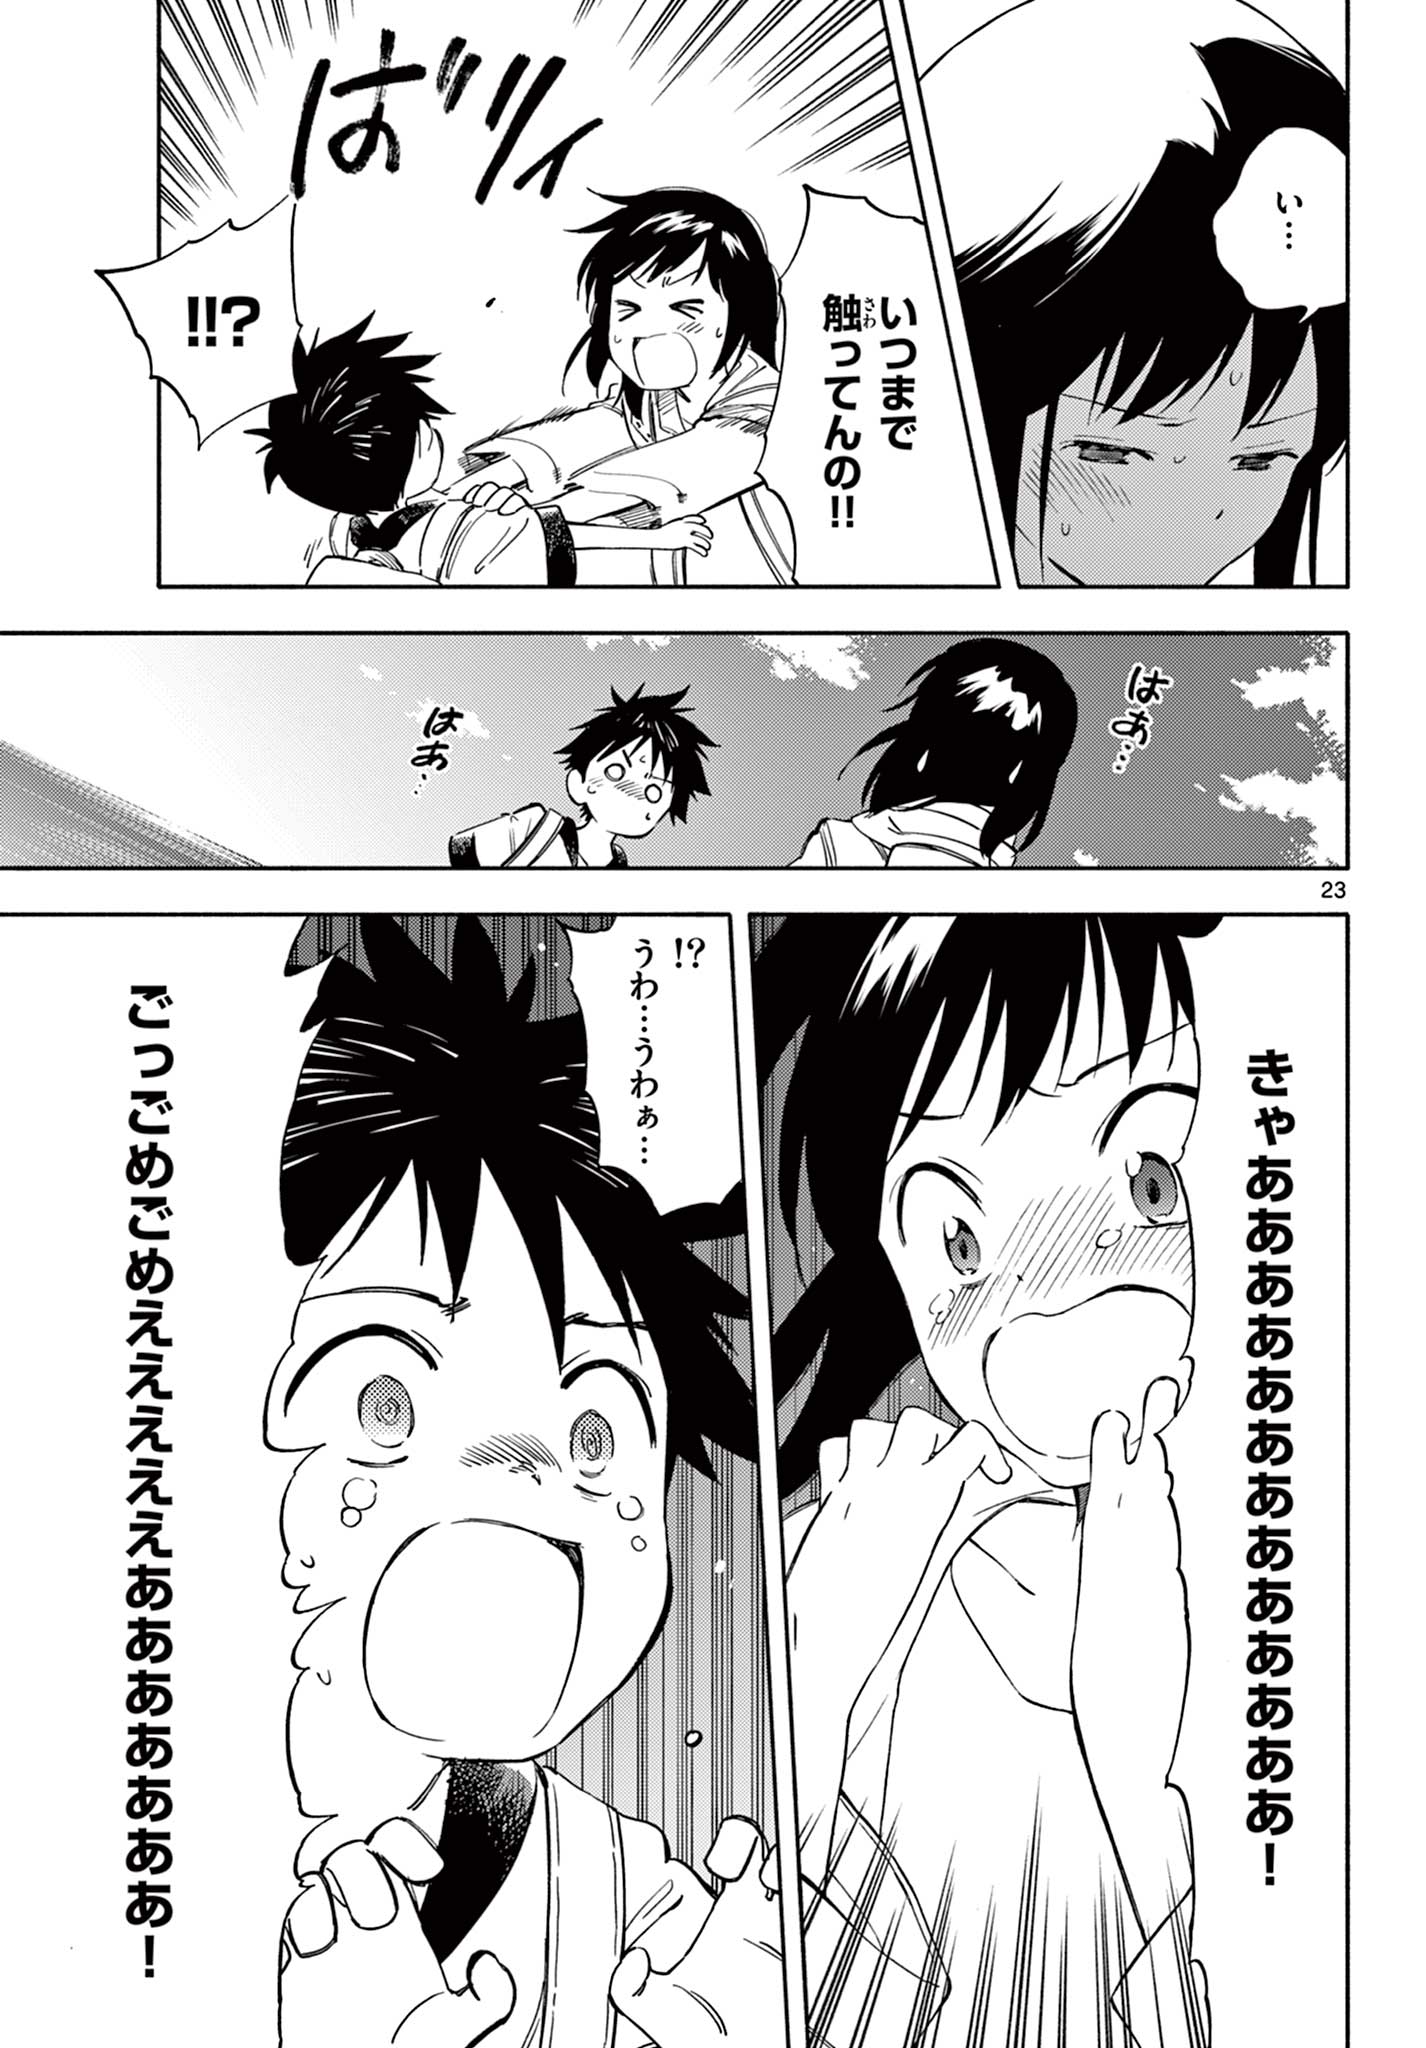 Nami no Shijima no Horizont - Chapter 14.2 - Page 11